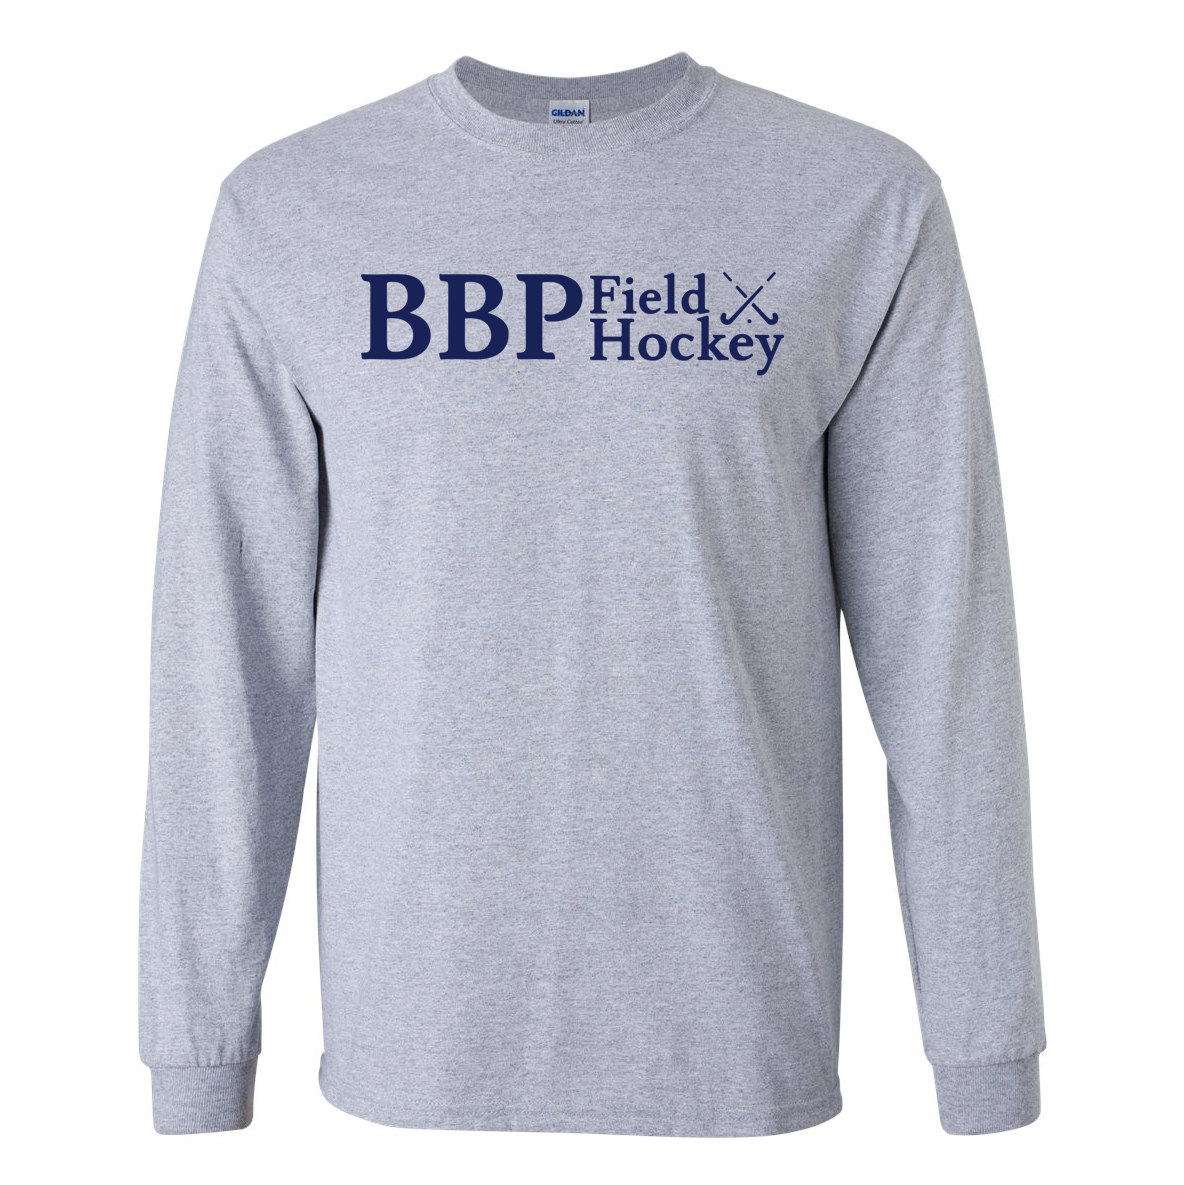 BBP Field Hockey Ultra Cotton Long Sleeve Shirt